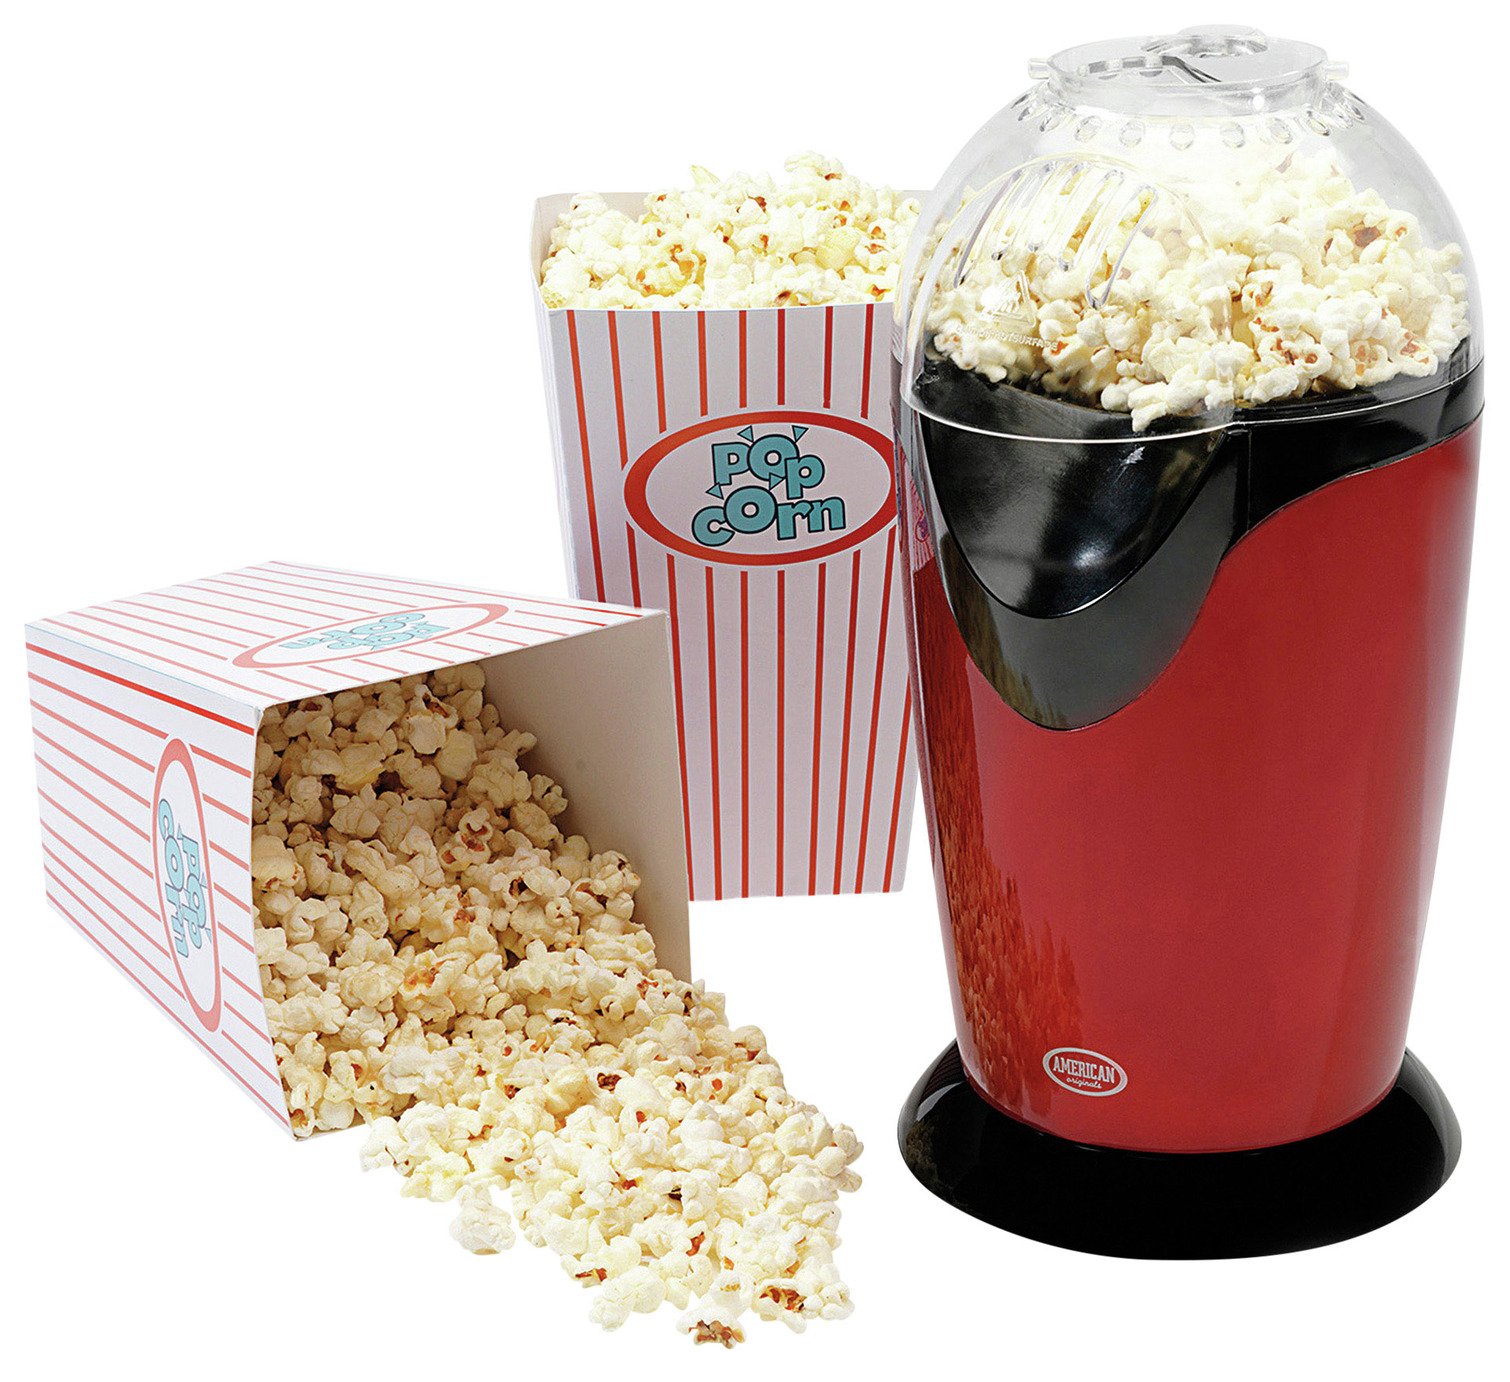 American Originals Popcorn Maker review